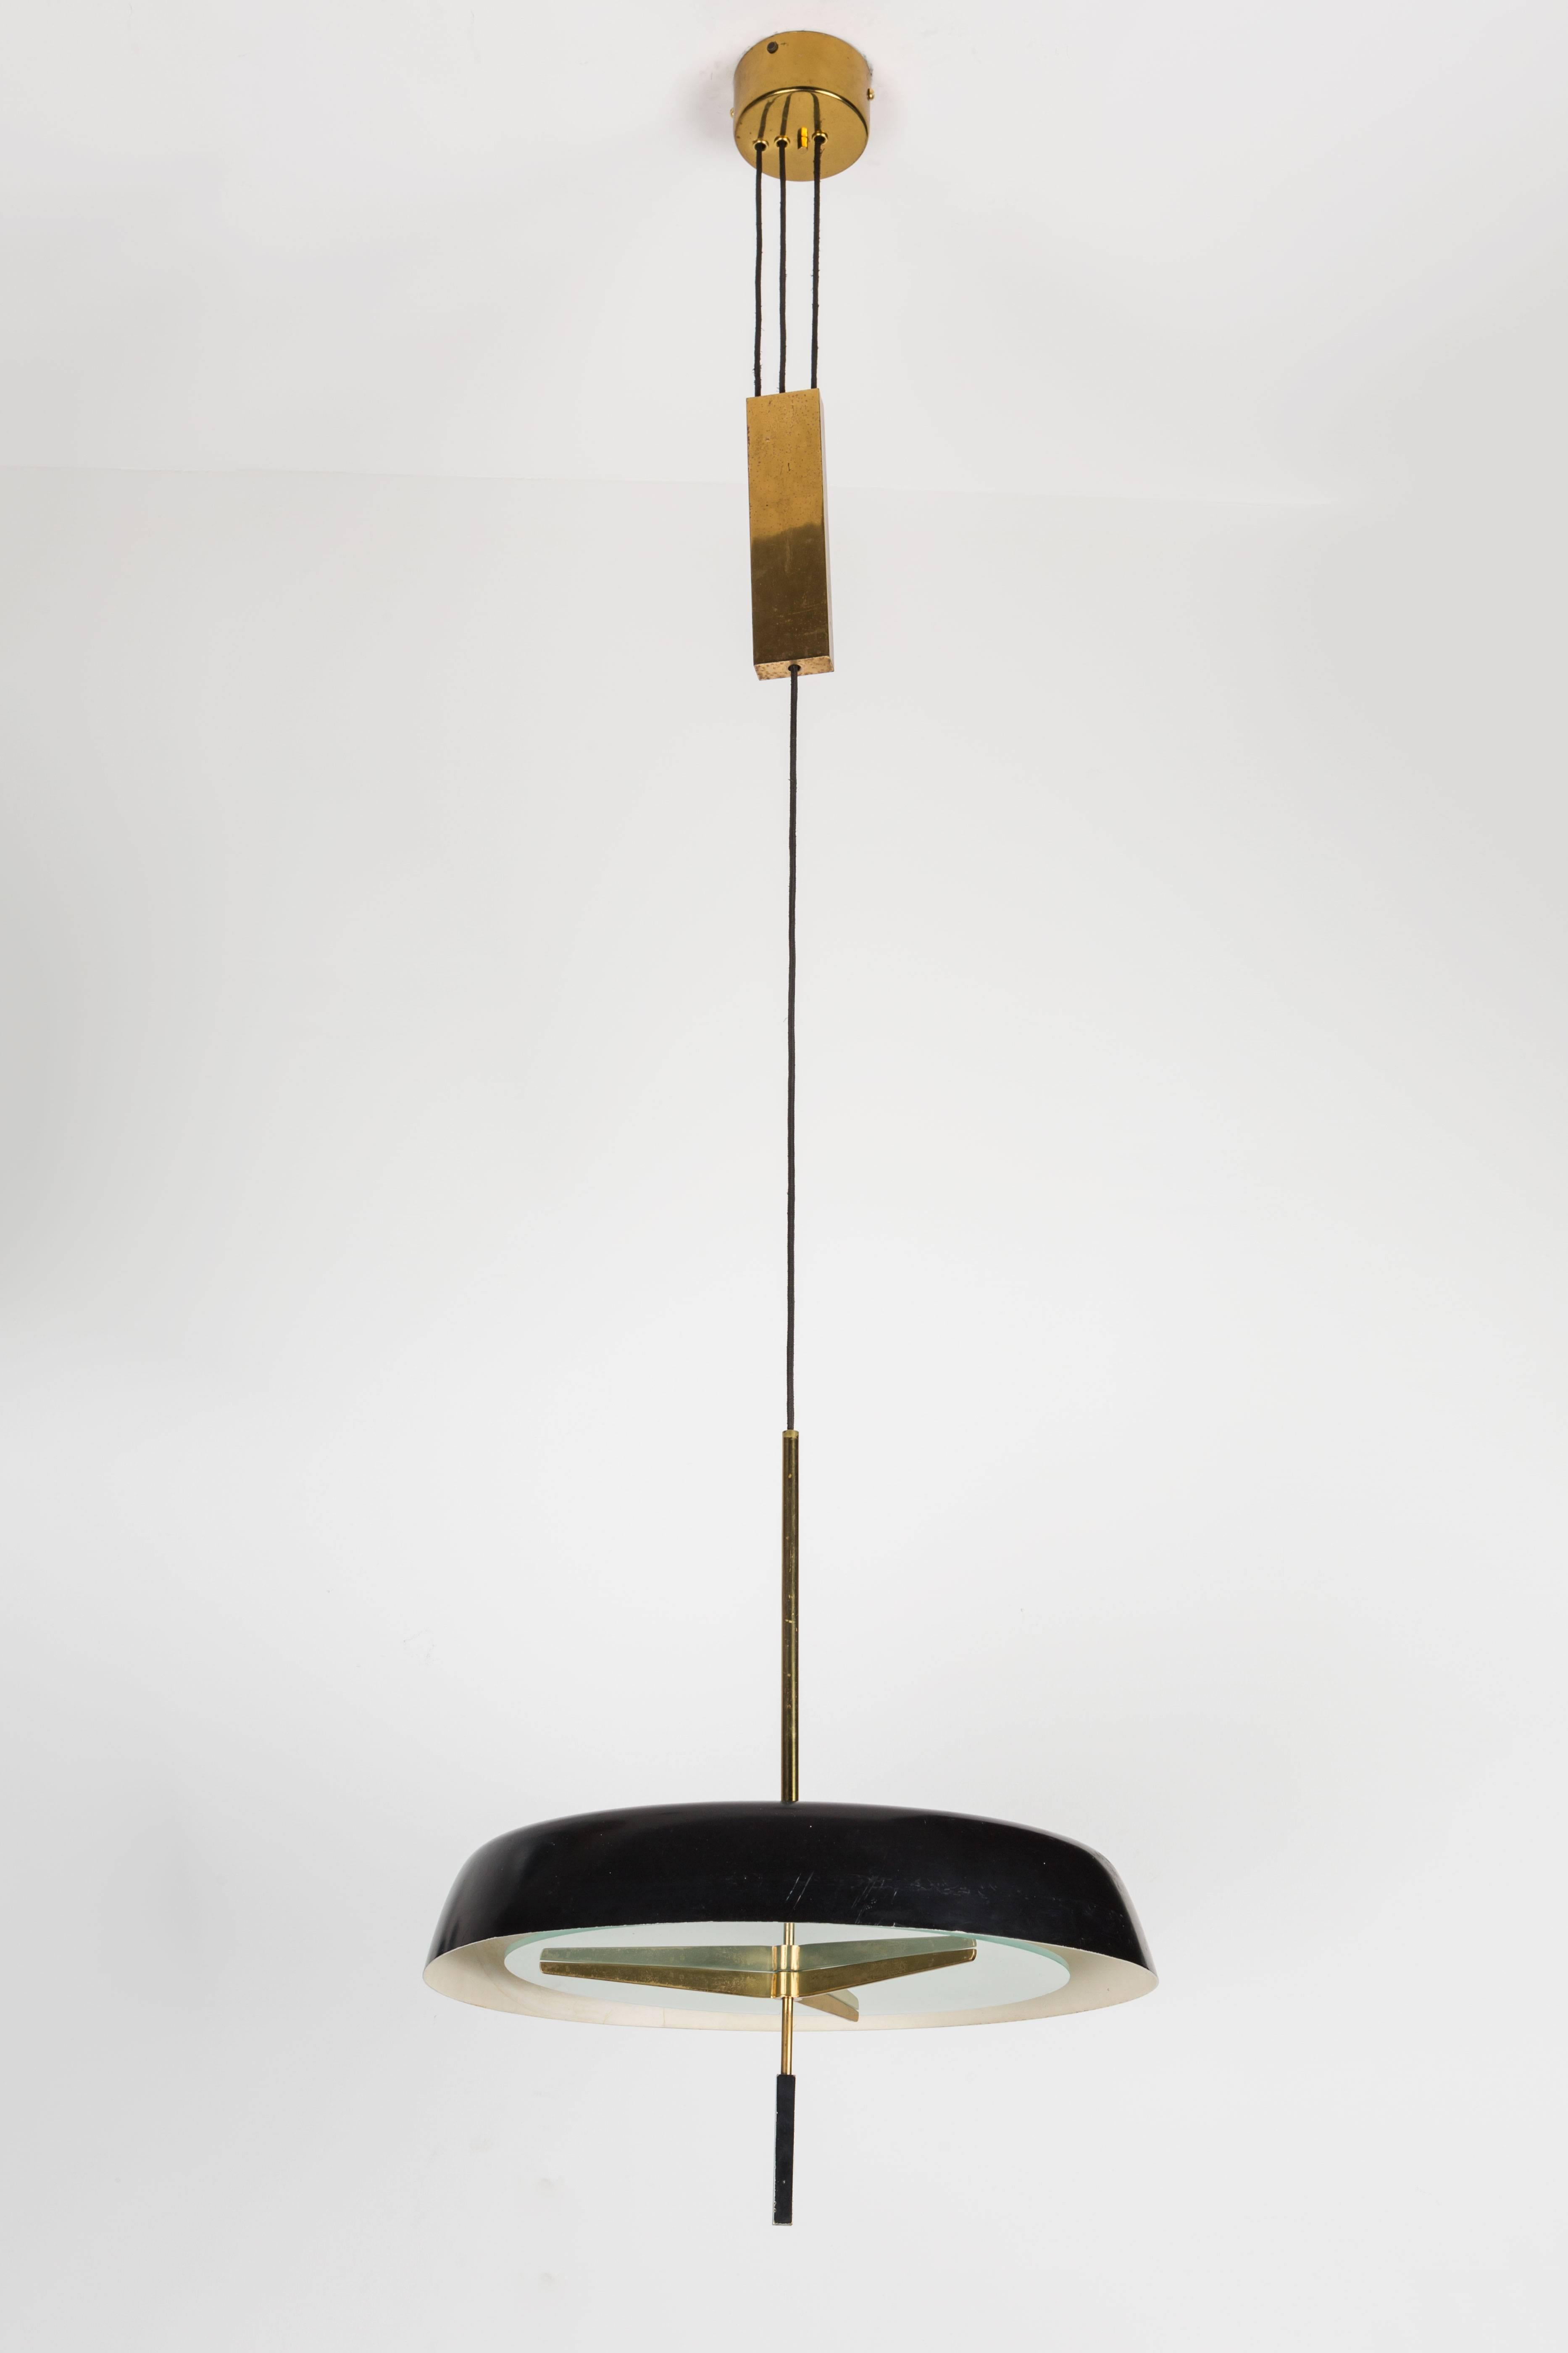 Italian Pendant Light with Brass Pulley by Stilnovo